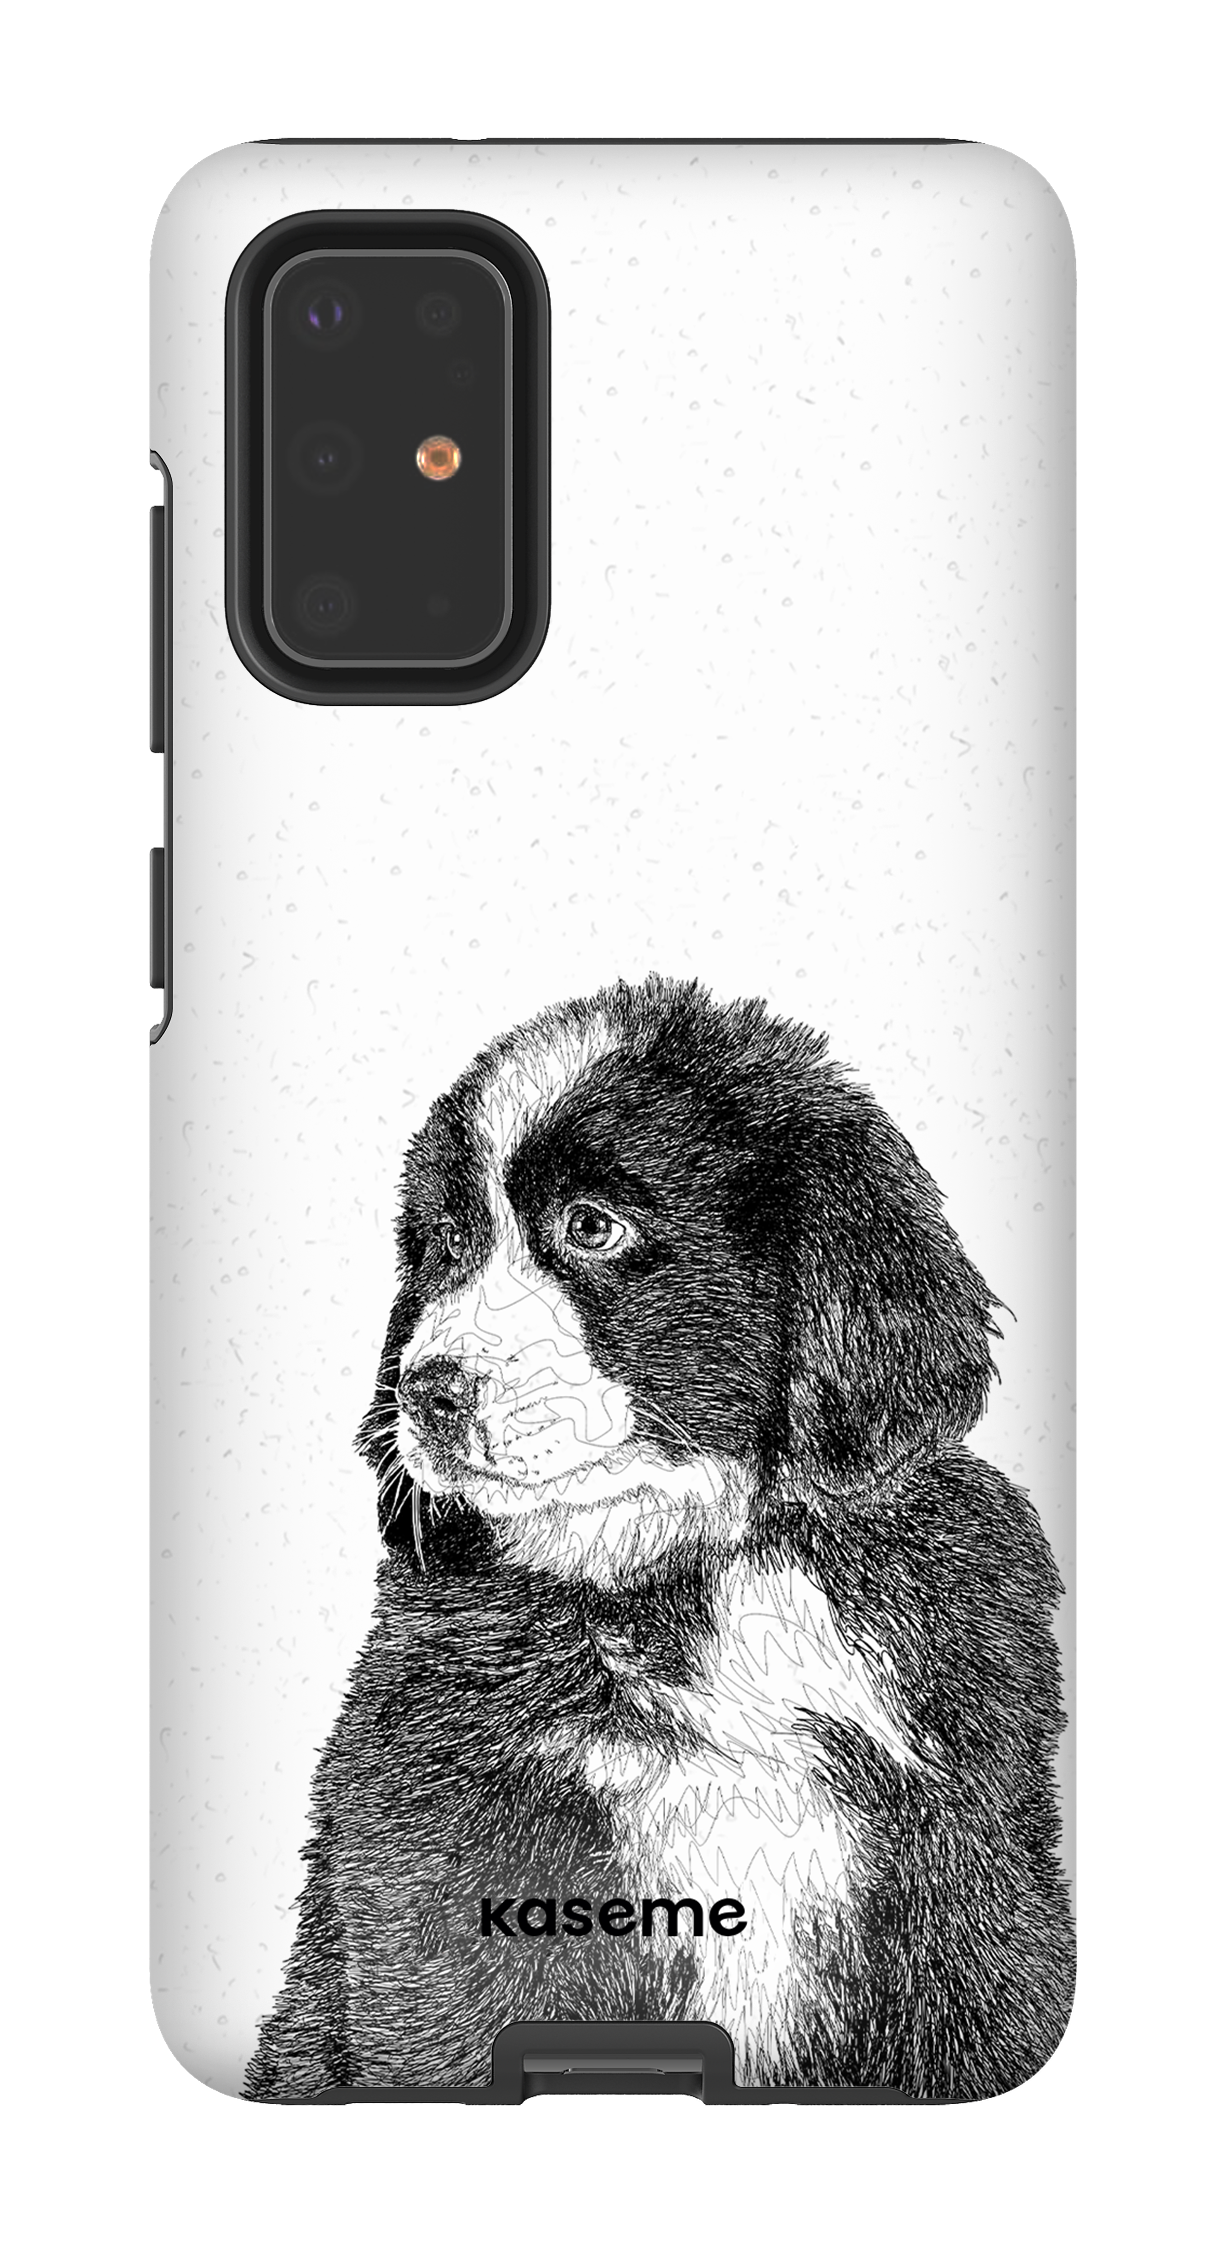 Bernese Mountain Dog - Galaxy S20 Plus